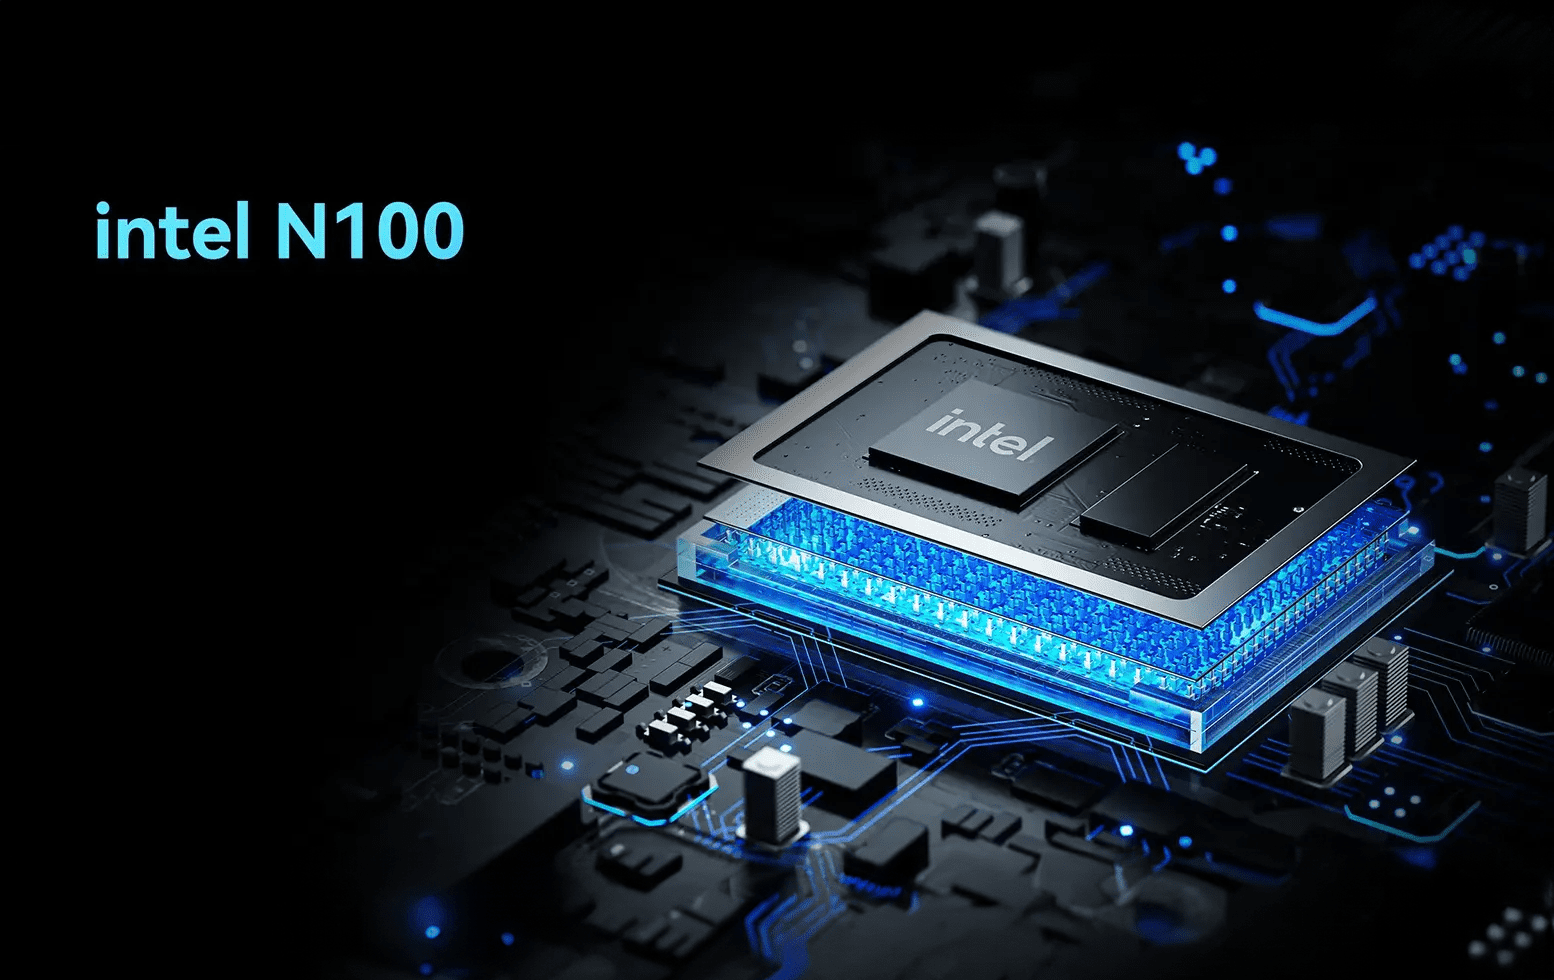 Procesor intel N100